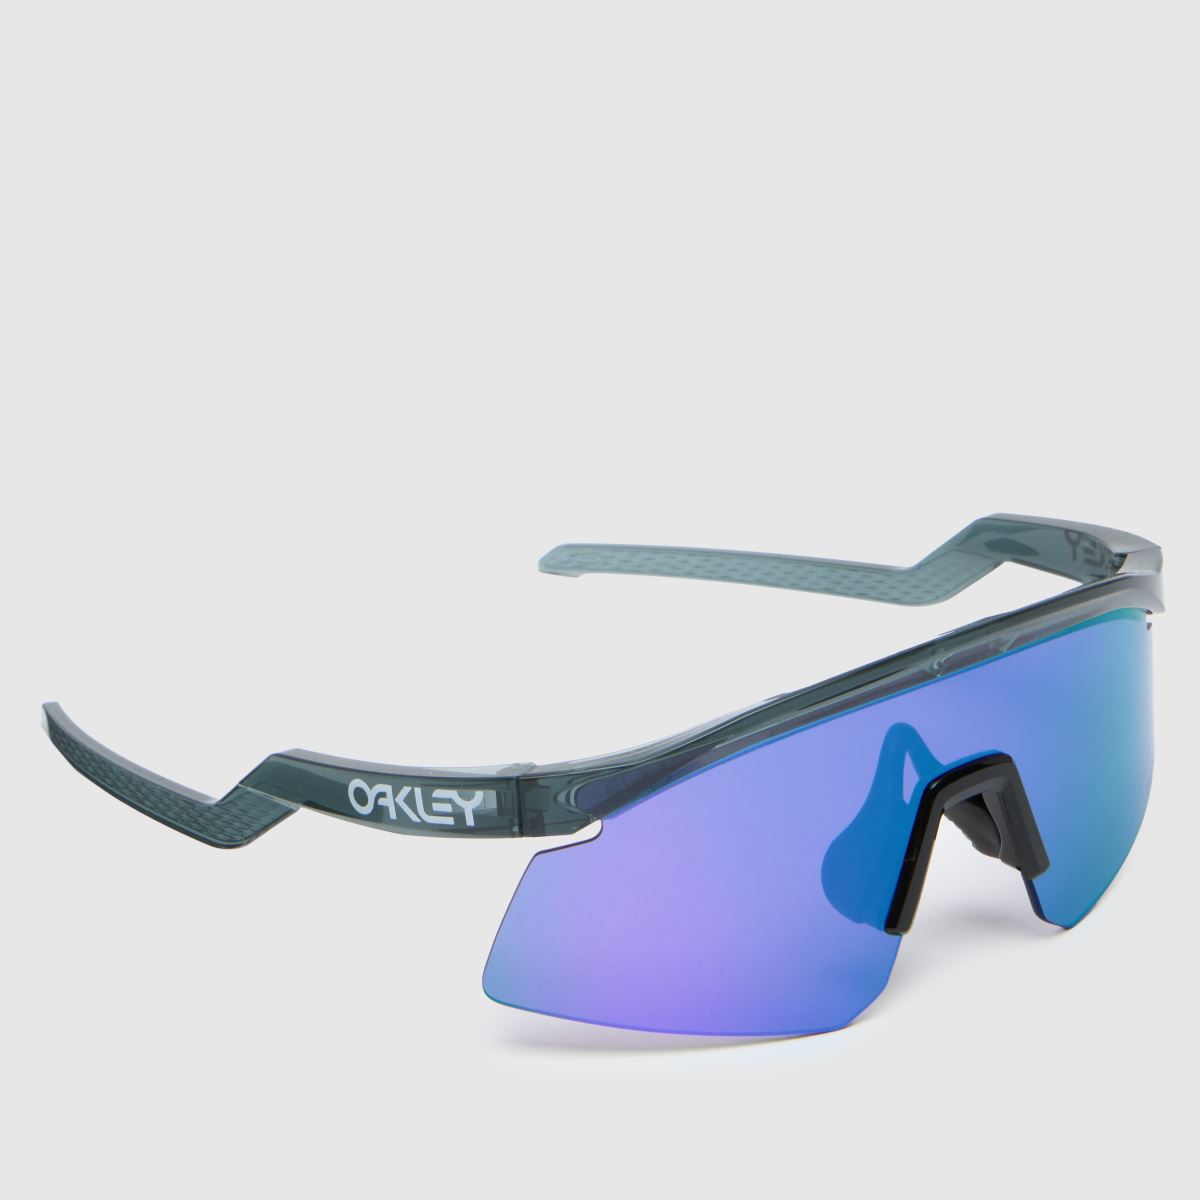 Oakley black hydra sunglasses